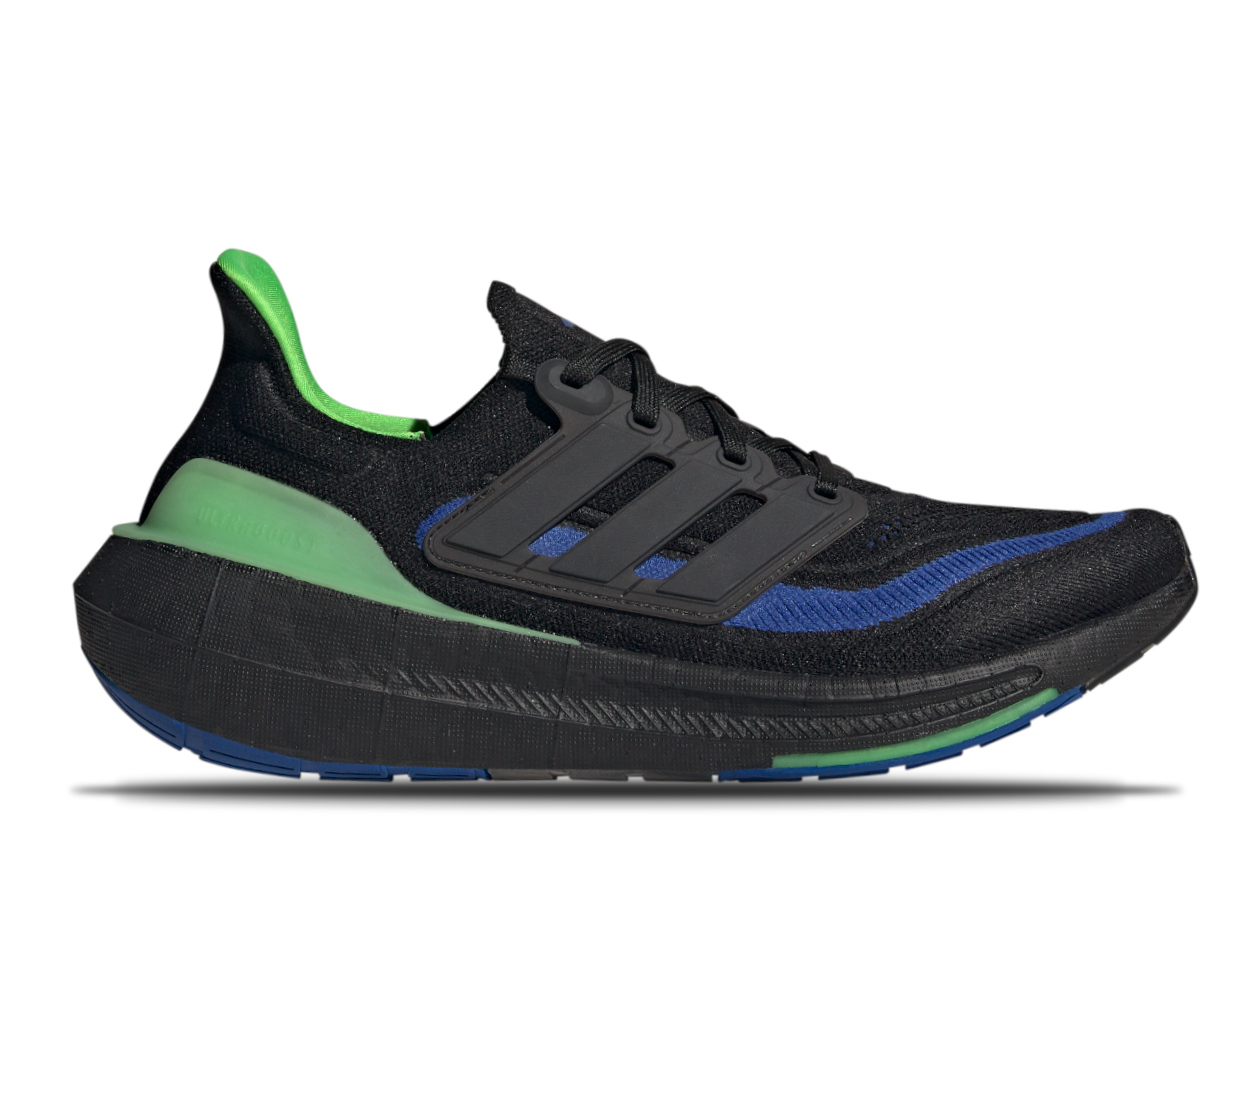 Adidas Ultraboost Light (U) scarpa leggera e energetica | LBM Sport